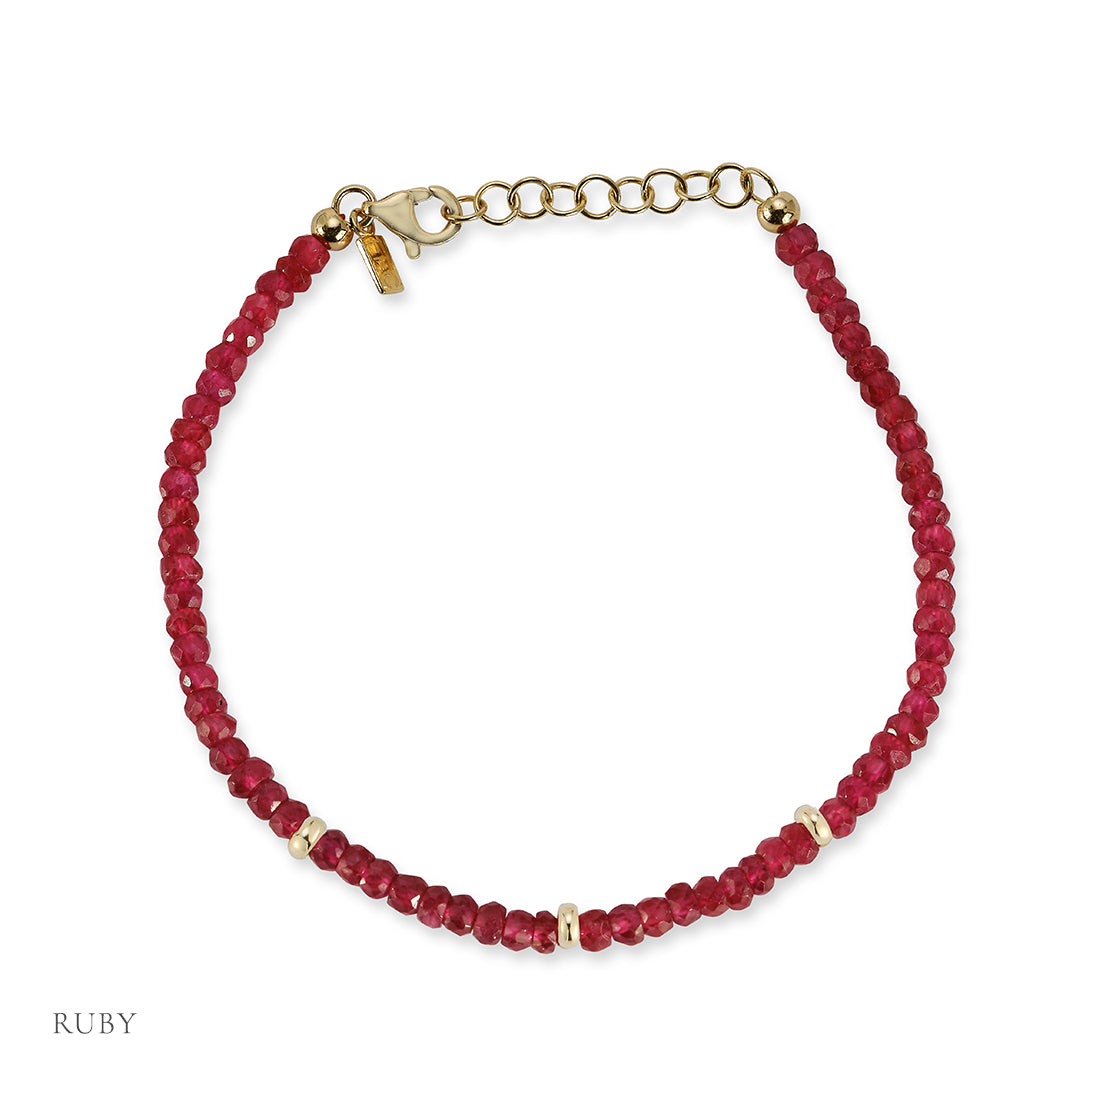 The Beaded Bracelet Gift Set - Ruby / July Option